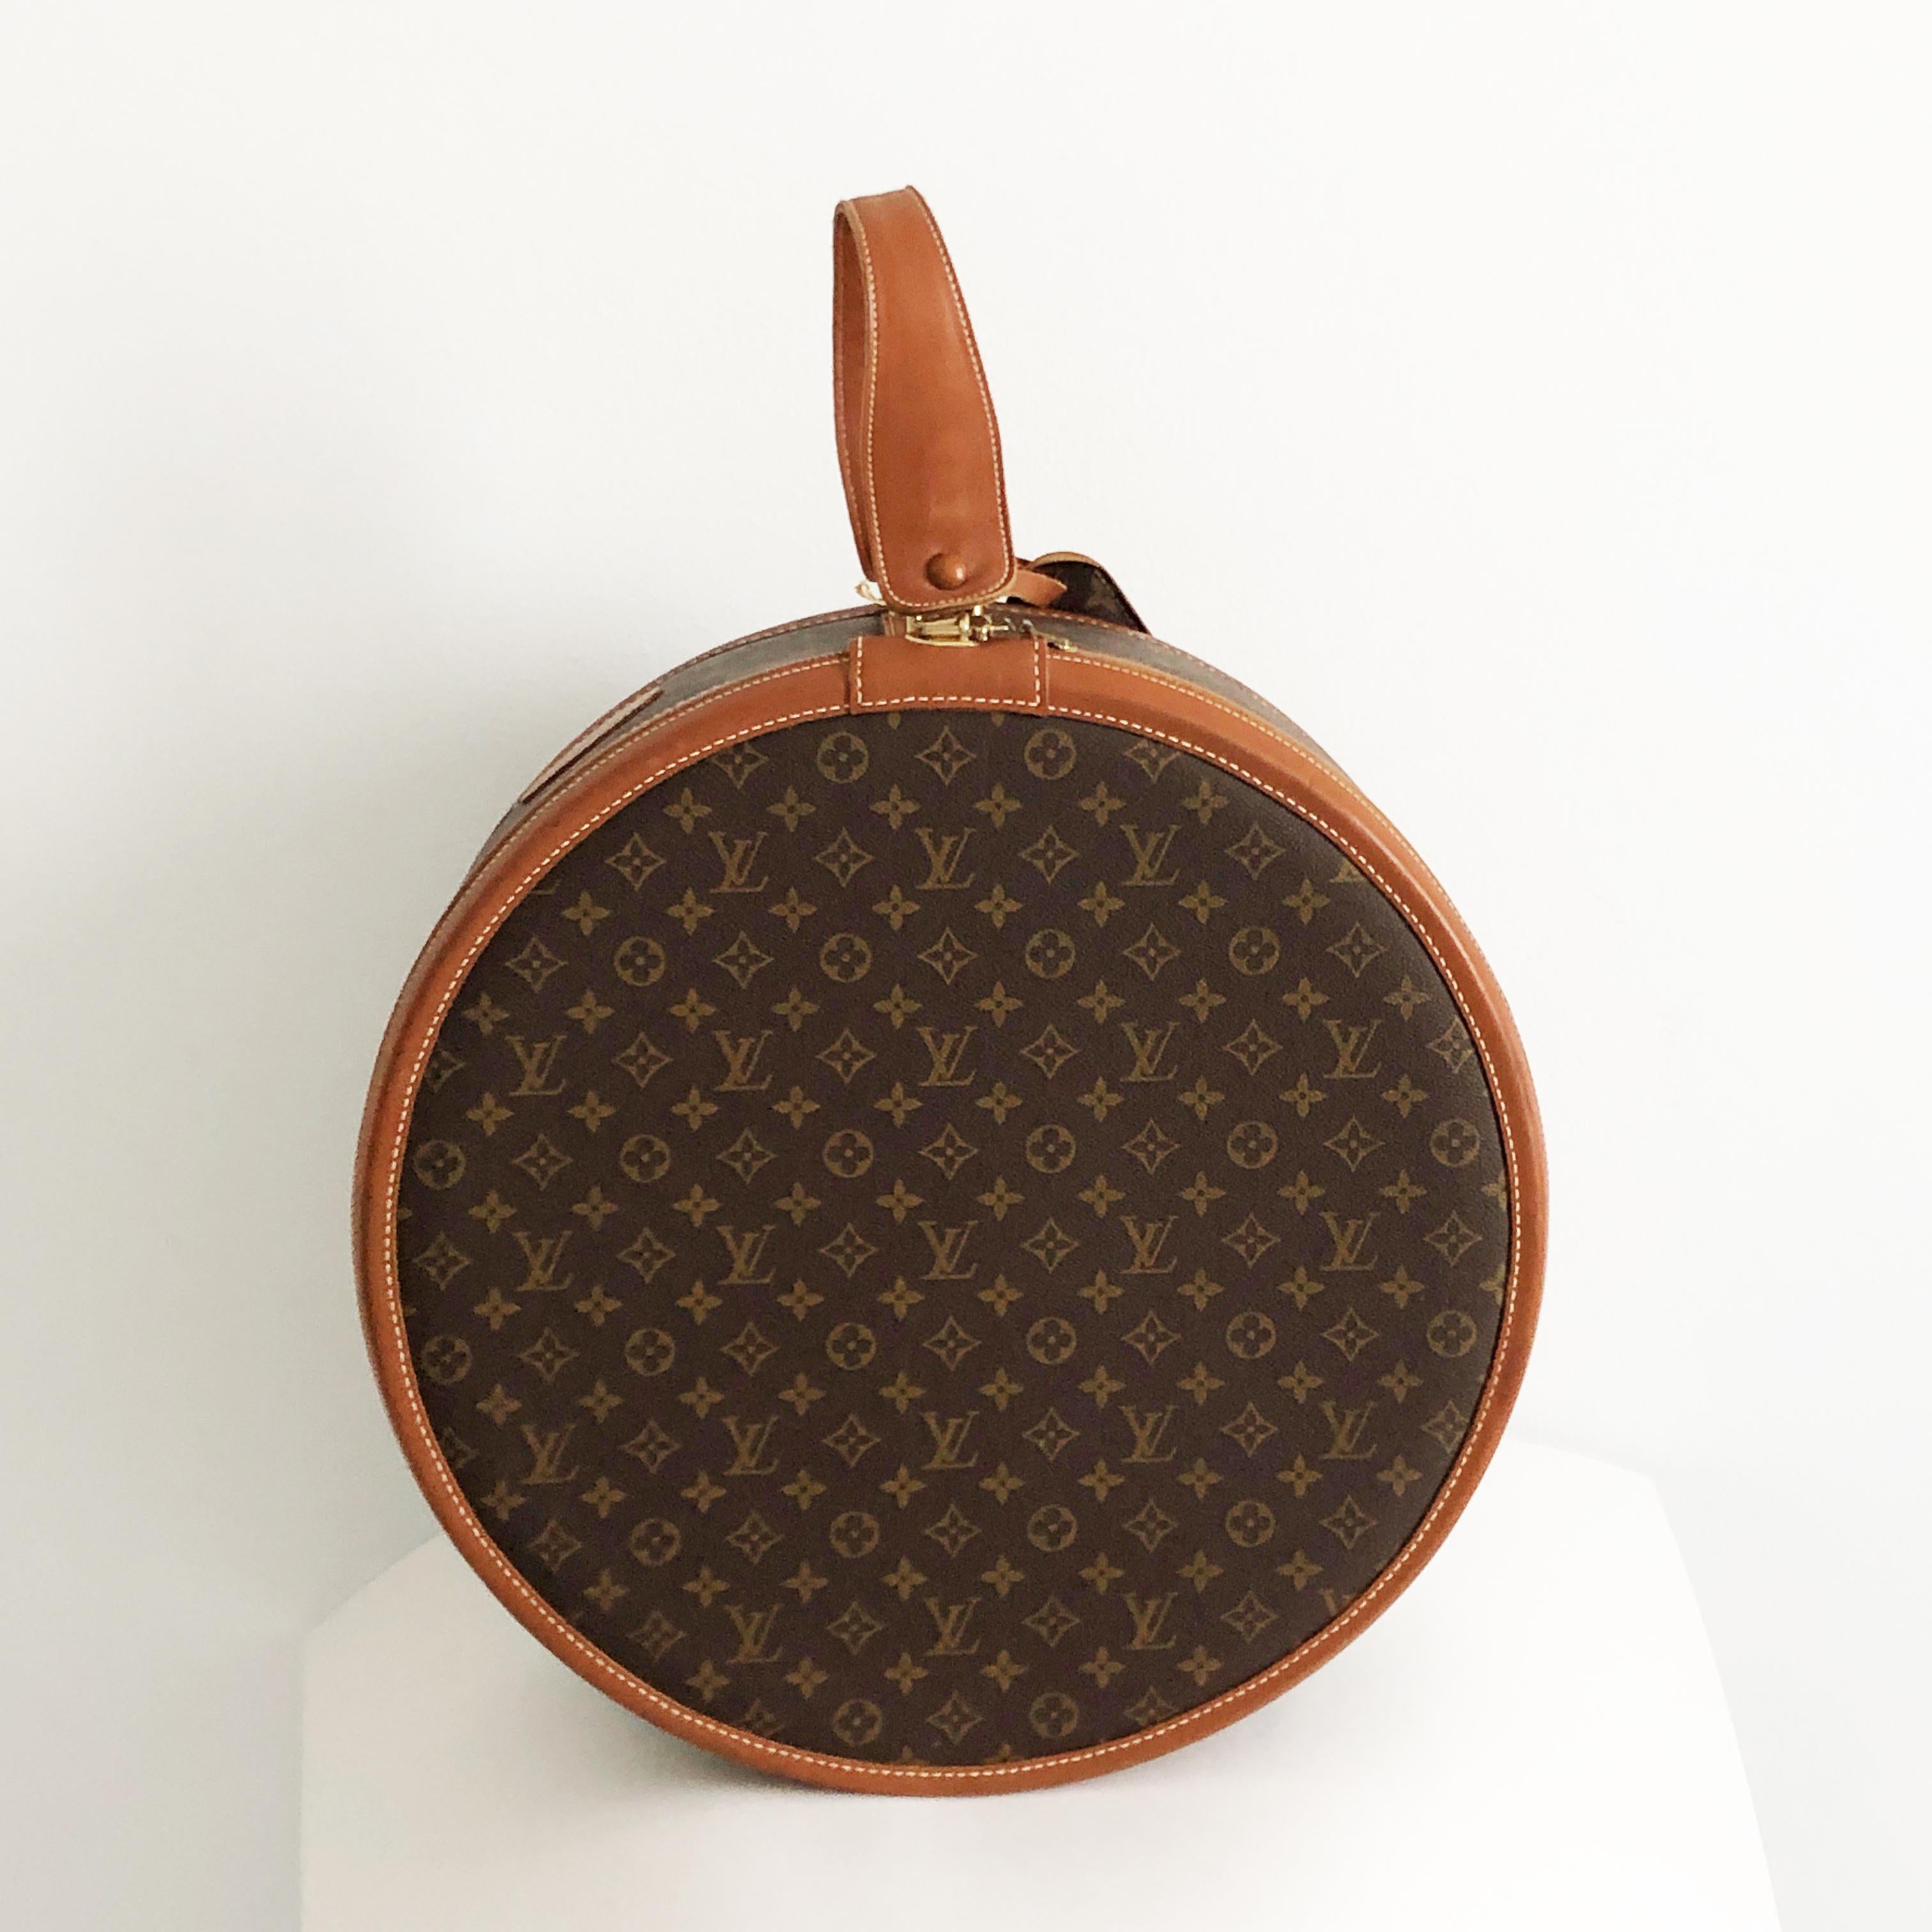 Black Louis Vuitton x The French Company Boite Chapeaux Round Hat Box 45cm Travel Bag